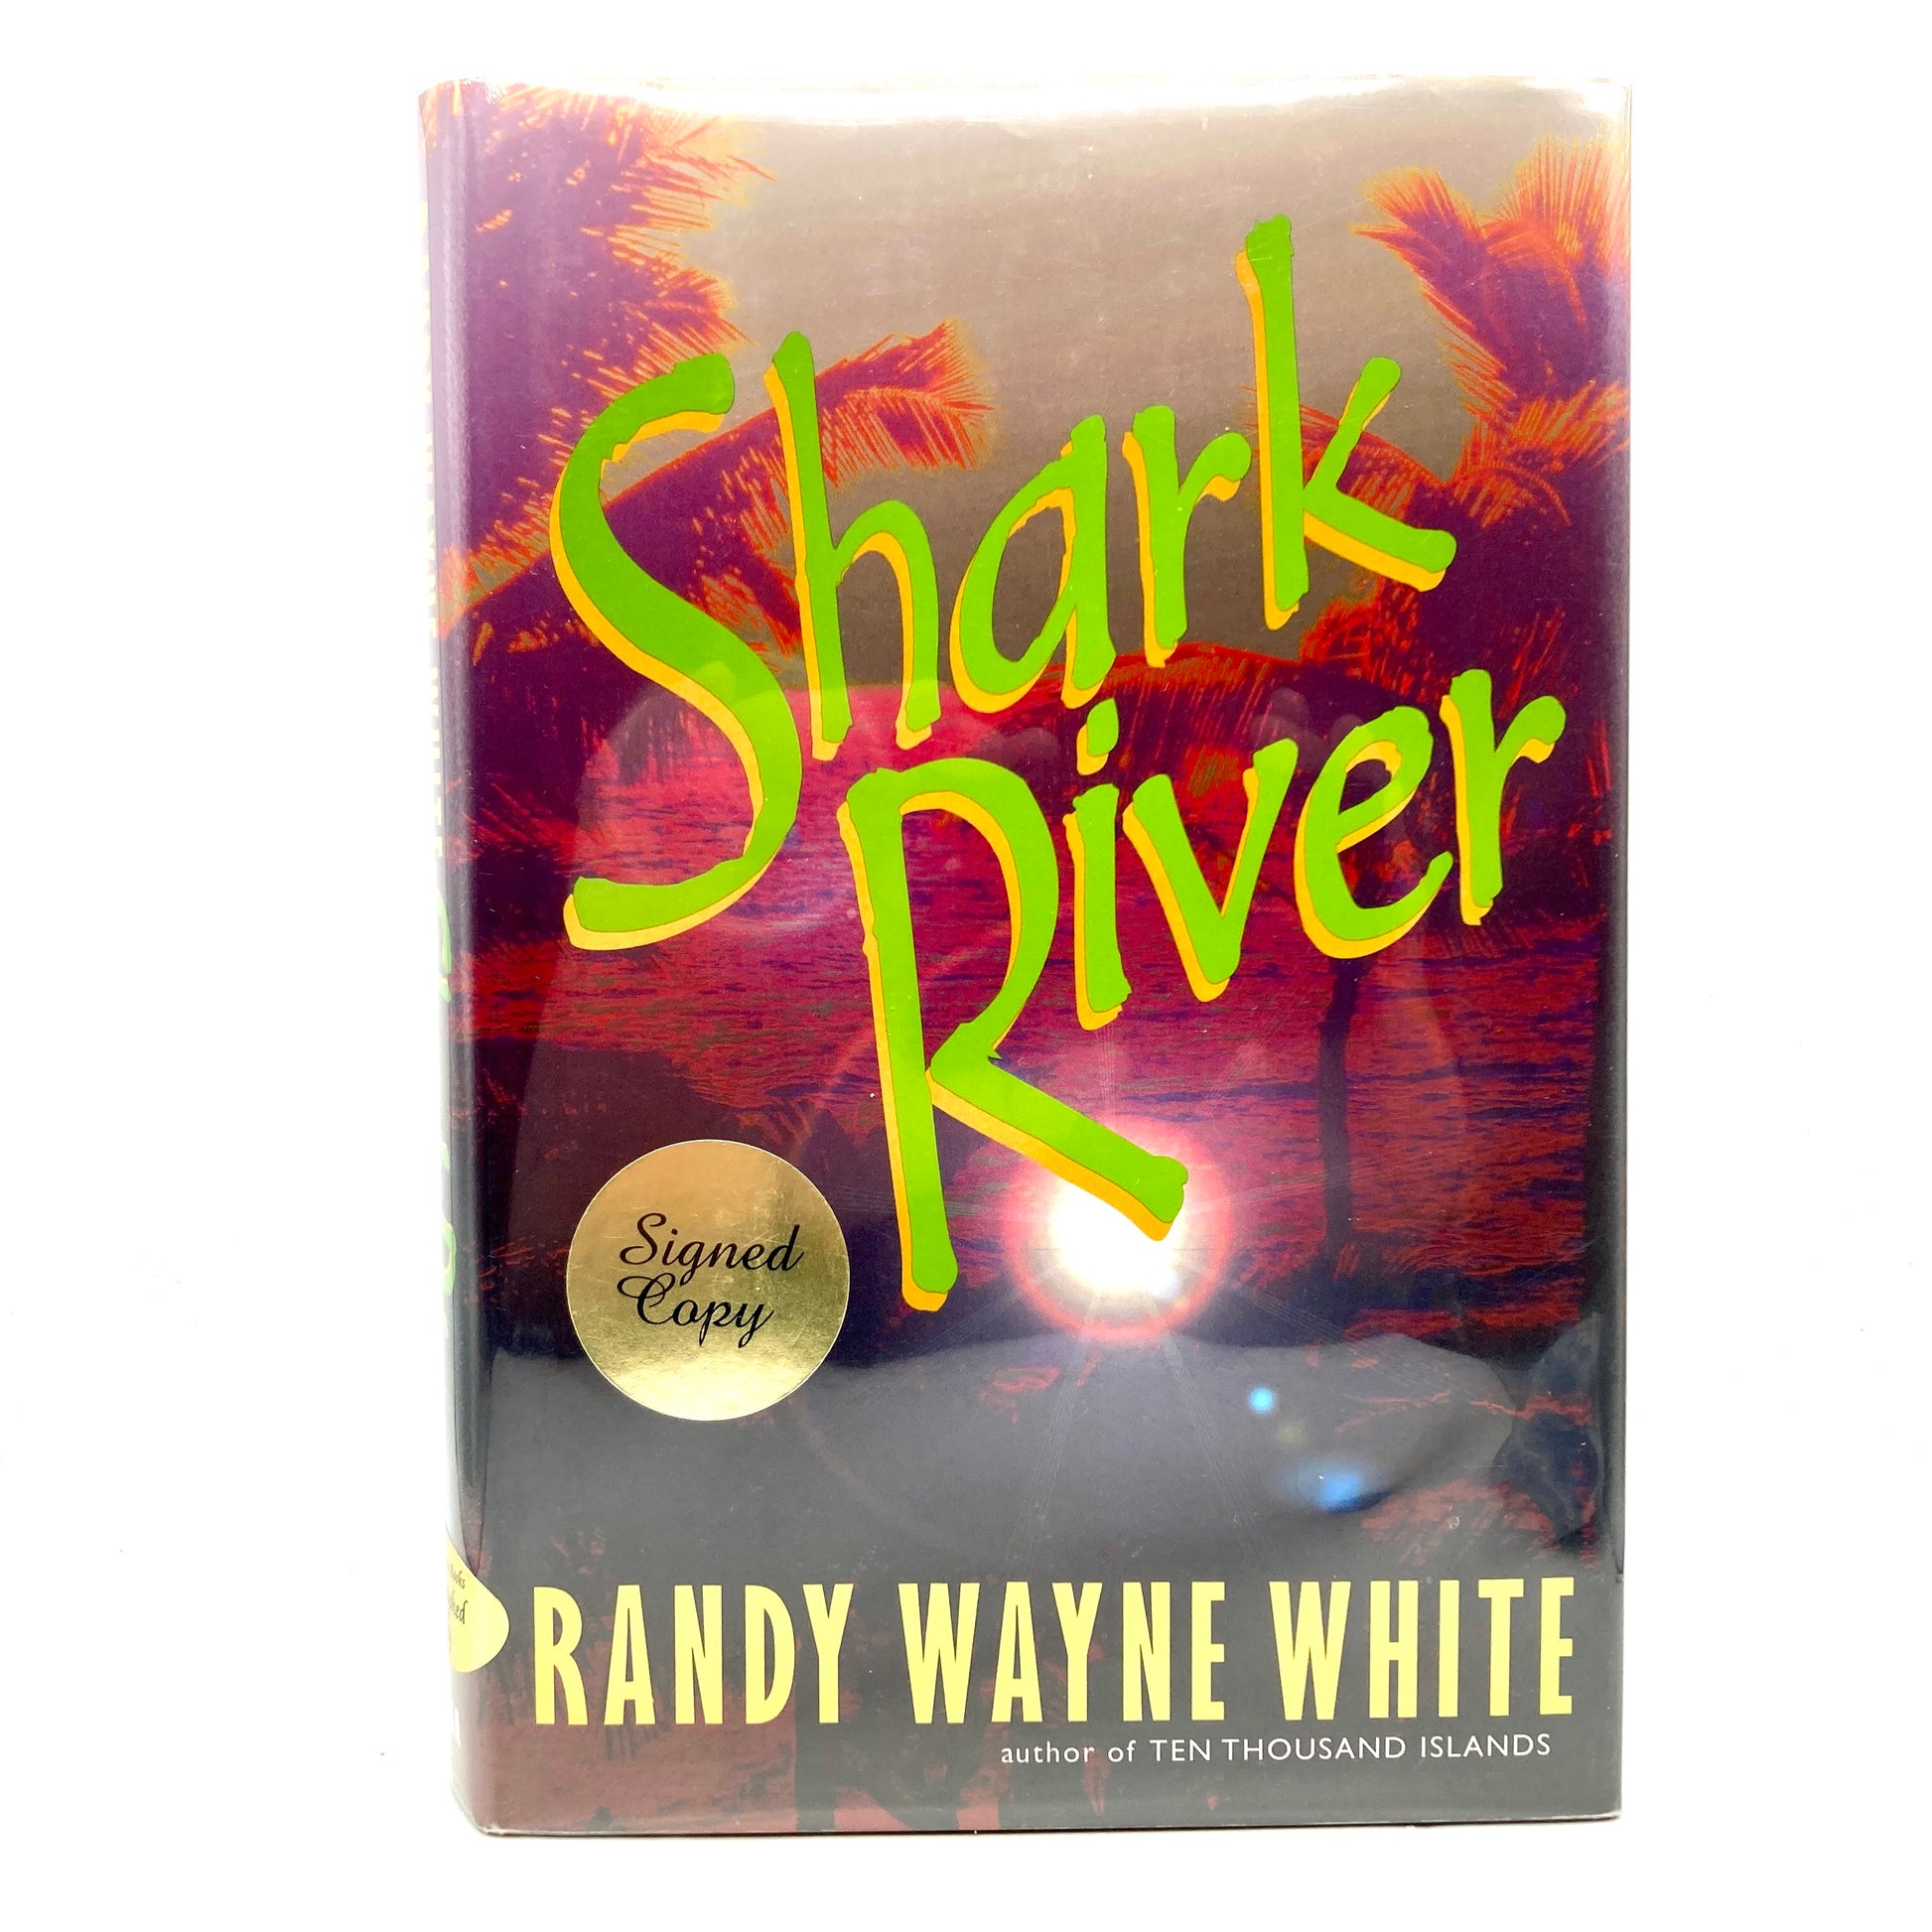 WHITE, Randy Wayne "Shark River" [Putnam, 2001] 1st Edition (Signed) #1 - Buzz Bookstore